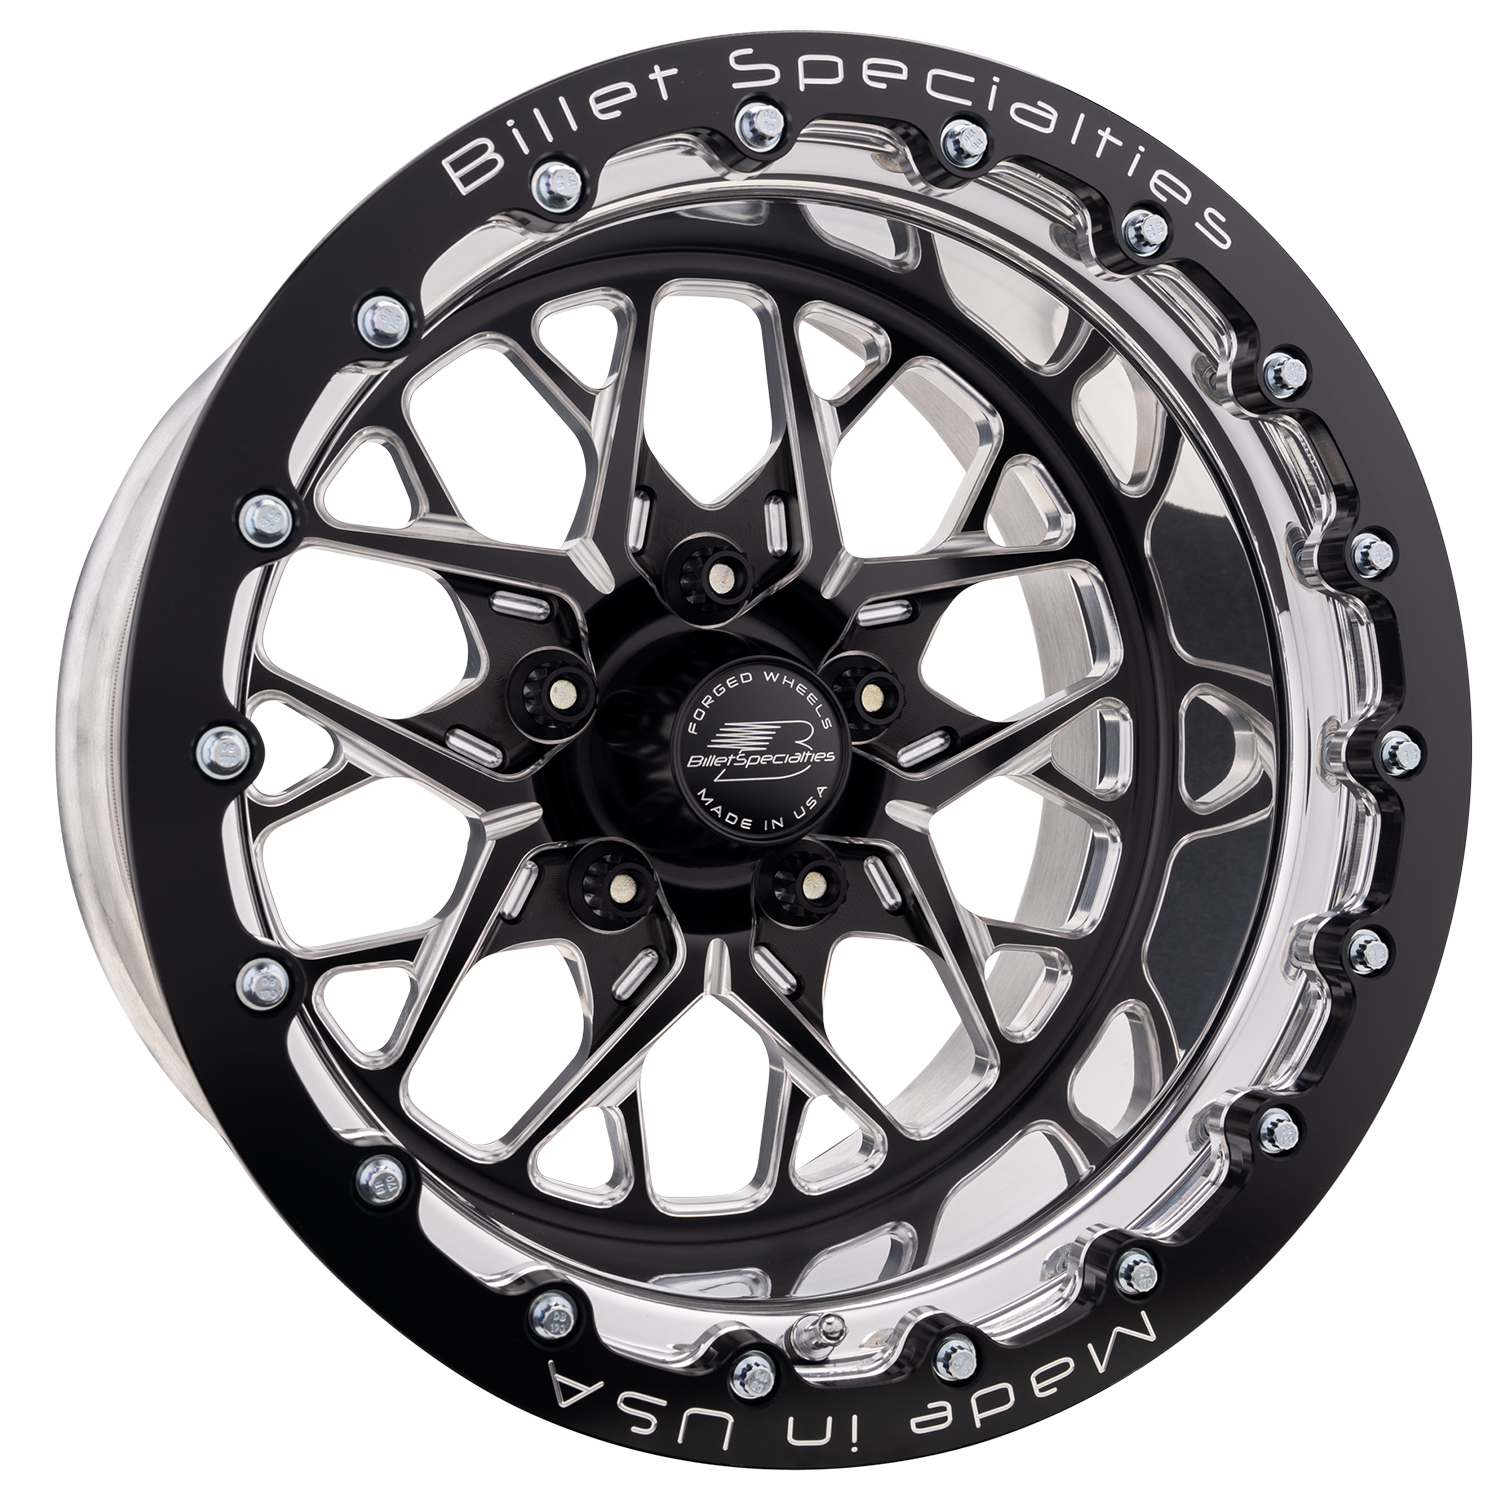 REDLINE Single-Beadlock Front Wheel, Size: 15" x 10", Bolt Pattern: 5 x 120 mm, Offset: 12 mm [Black]